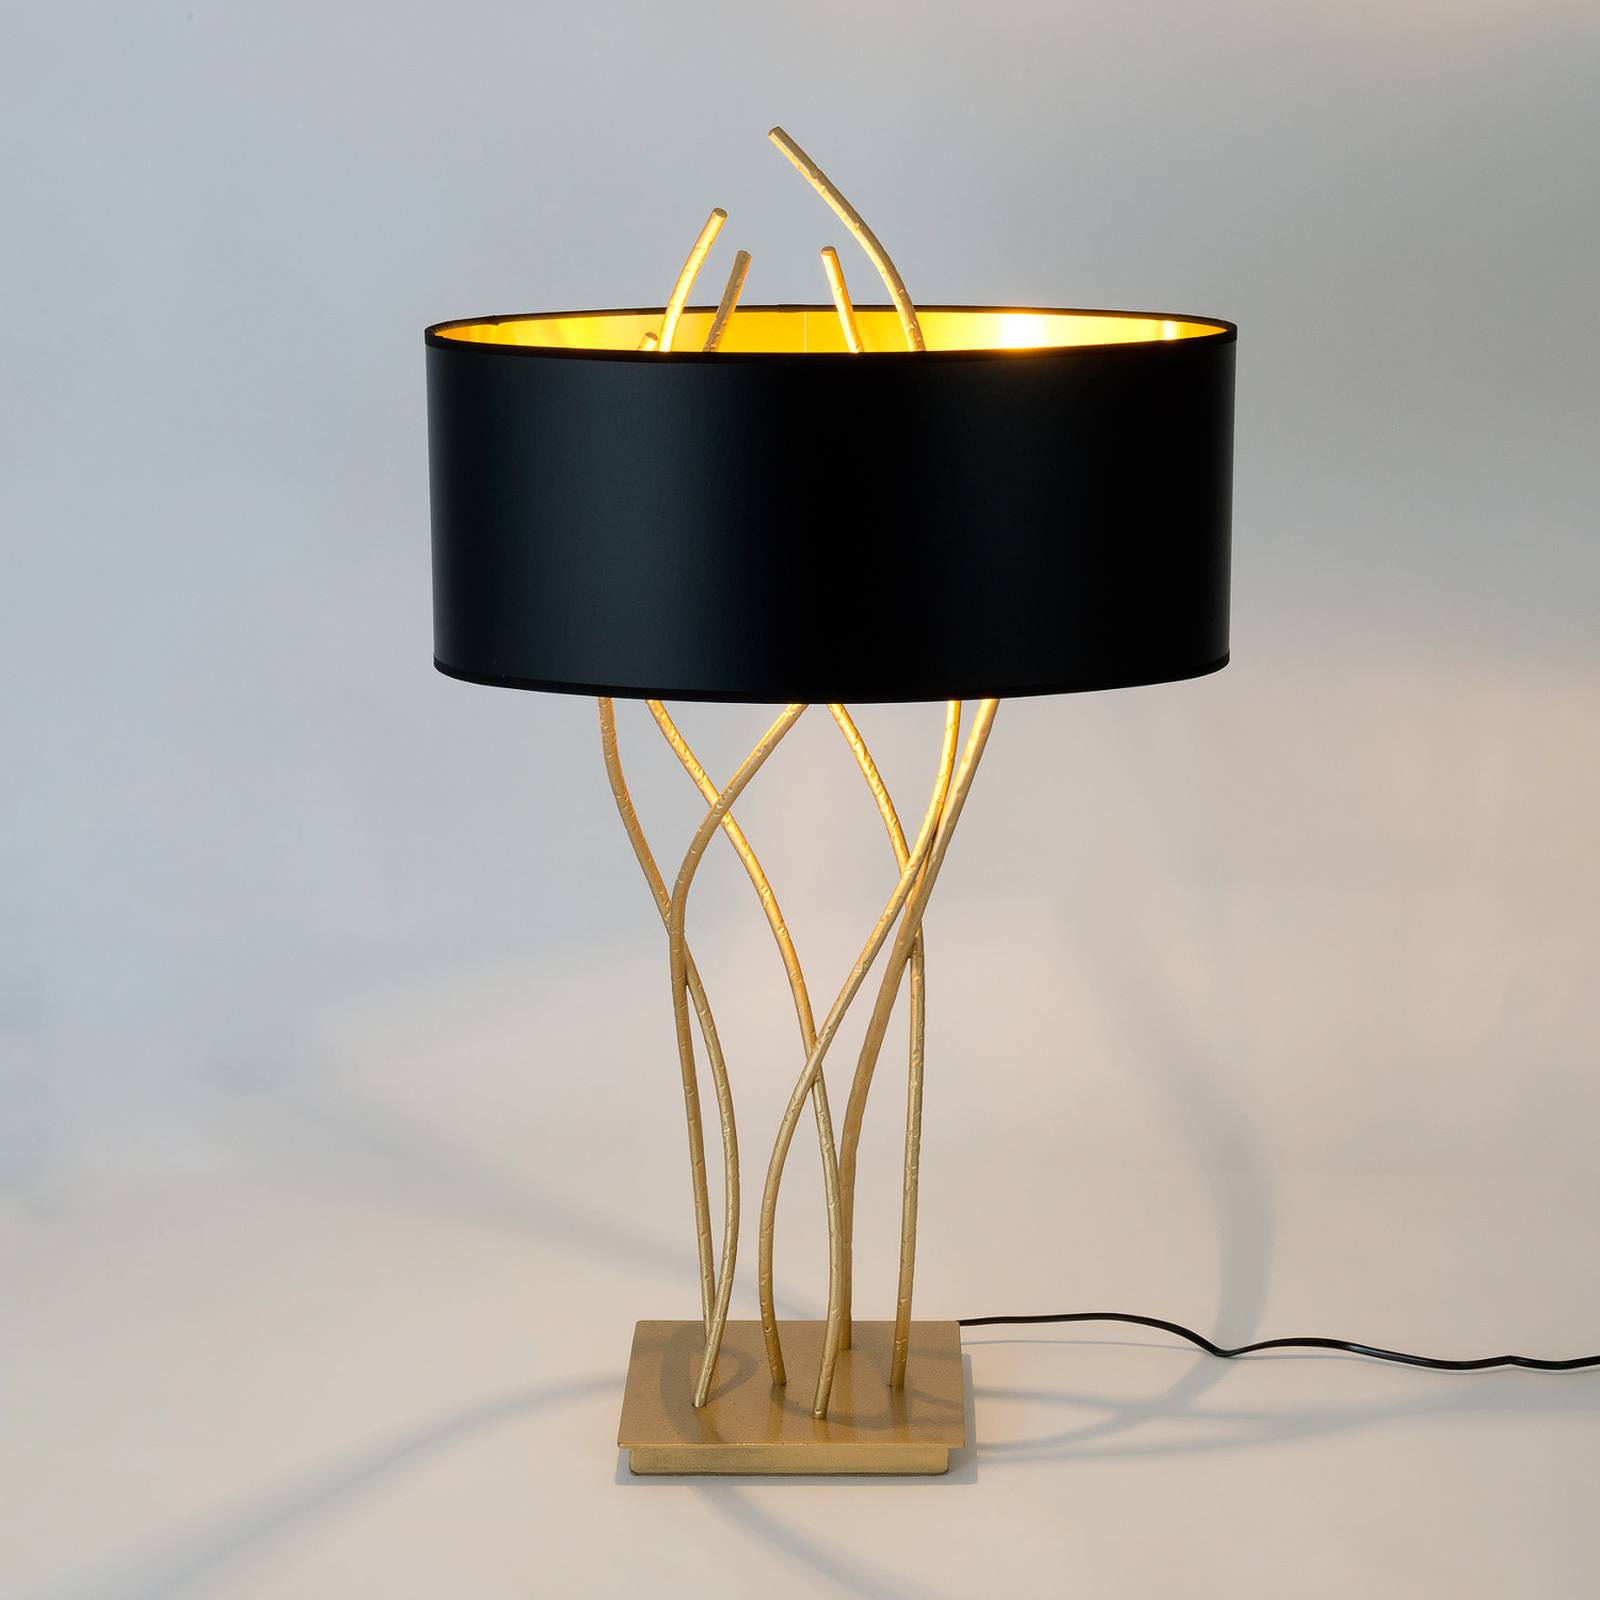 Elba oval bordlampe guld/sort højde 75 cm jern